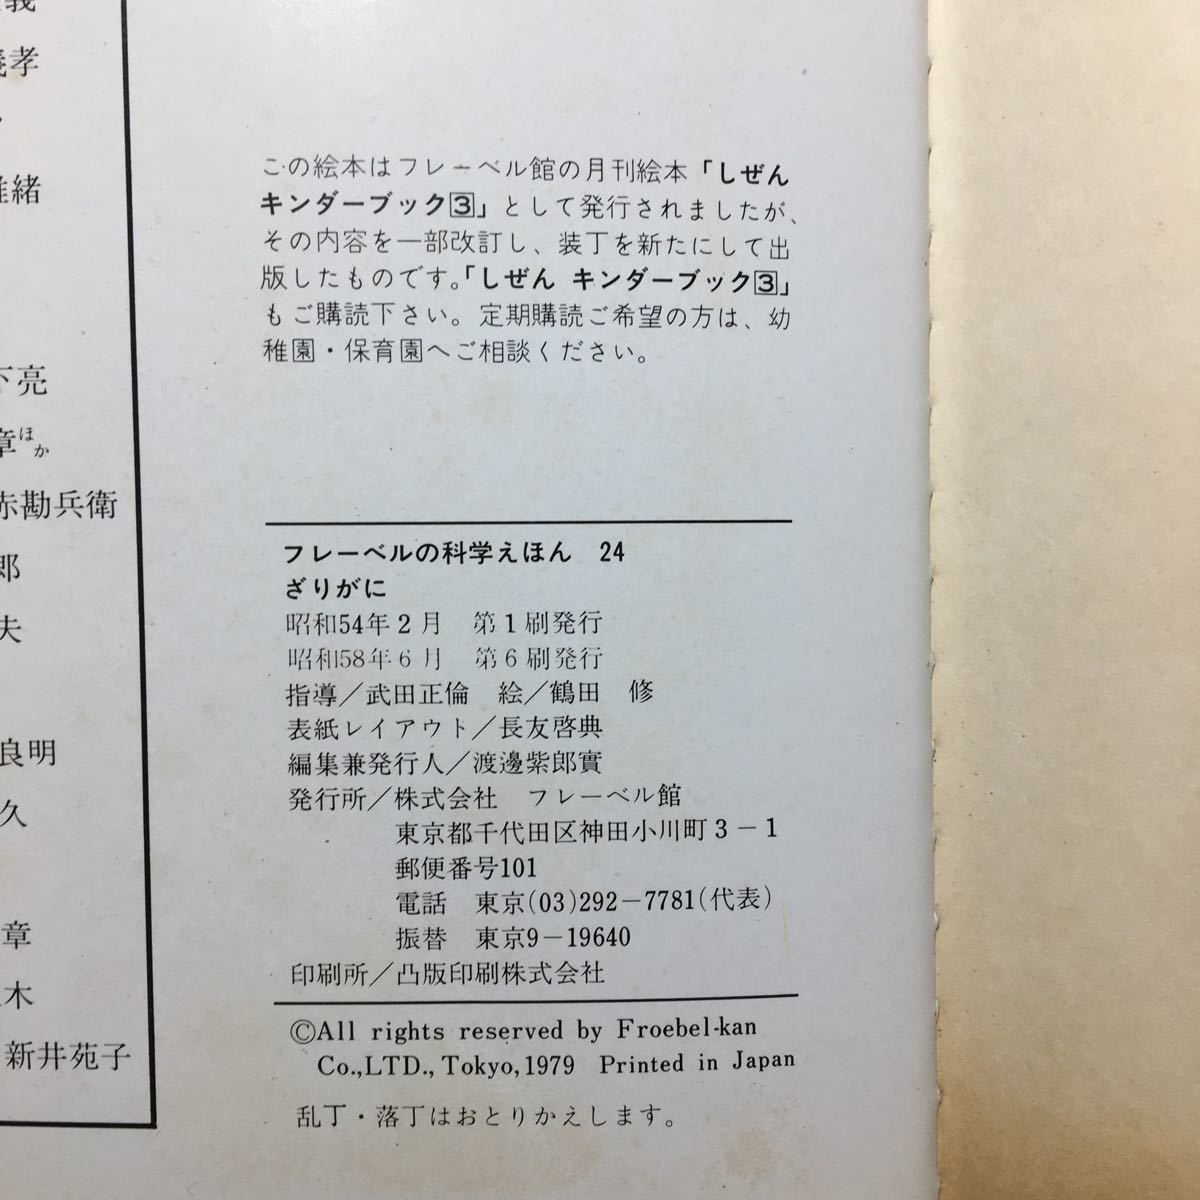 zaa-m1b♪ざりがに (フレーベルの科学えほん 24) (フレーベル館) 単行本 1979/2/1 鶴田 修 (イラスト)